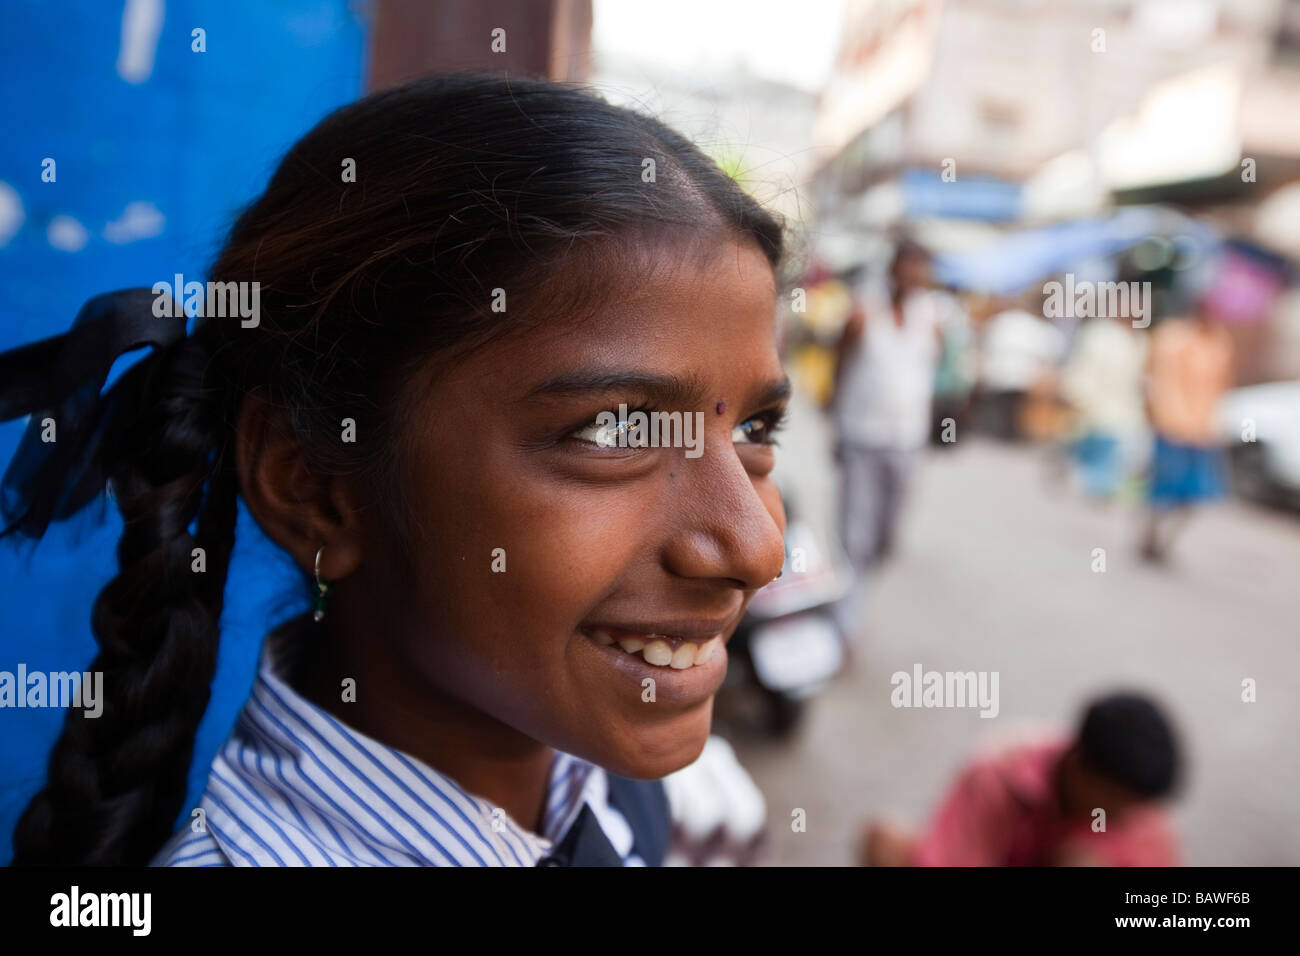 Young Smiling Indian Girl dans les rues de Mumbai Inde Banque D'Images